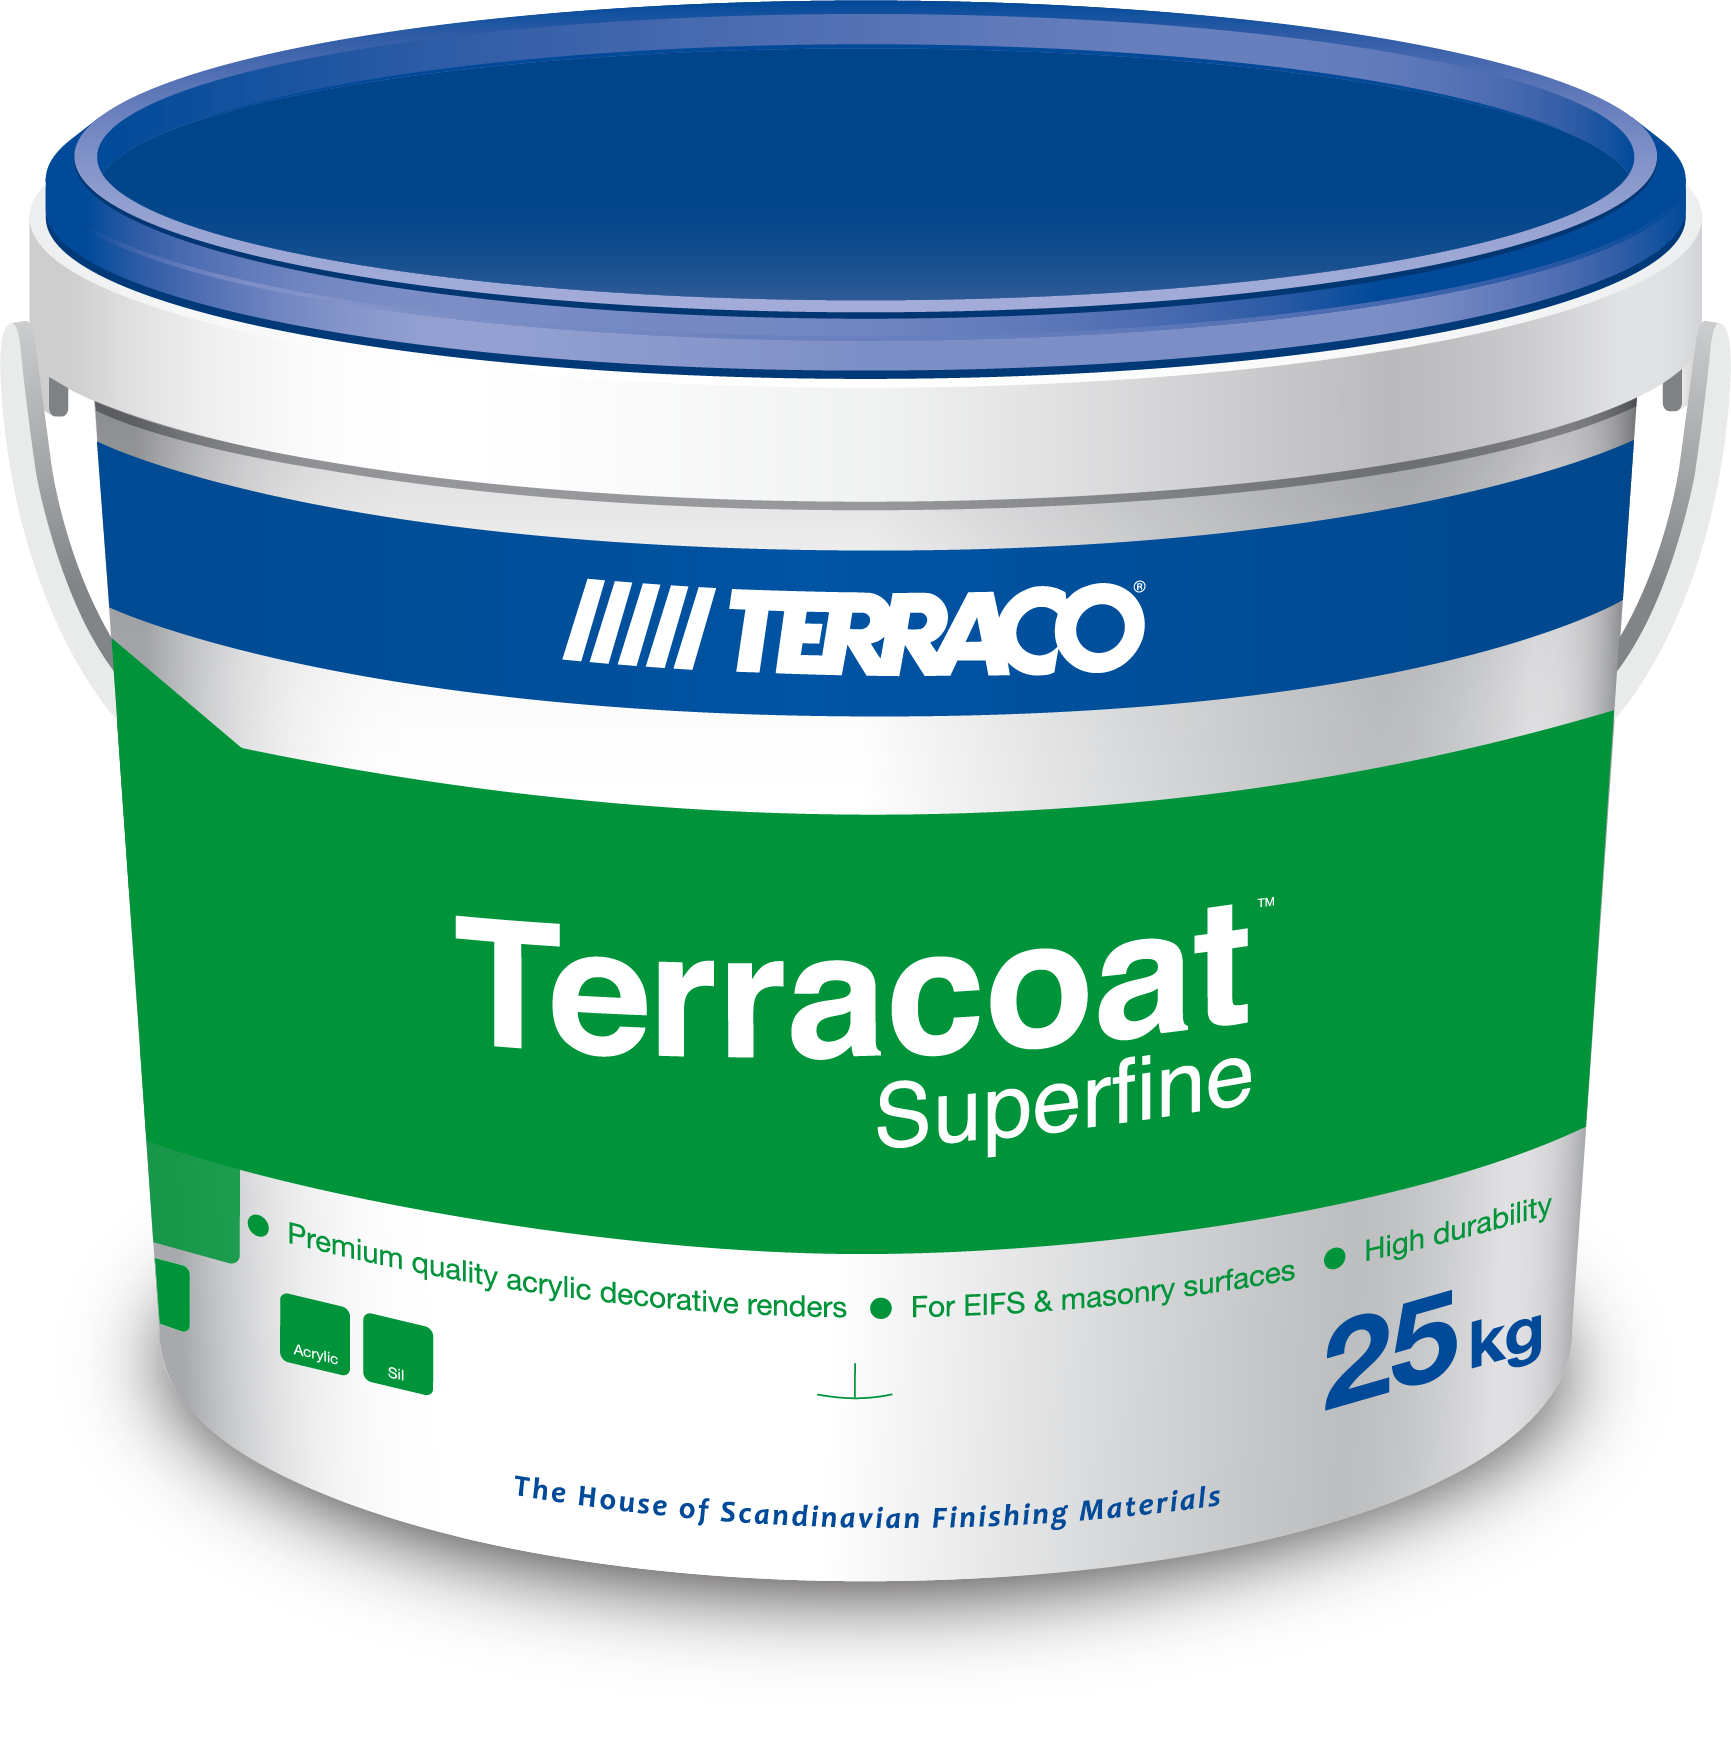 Terracoat Superfine